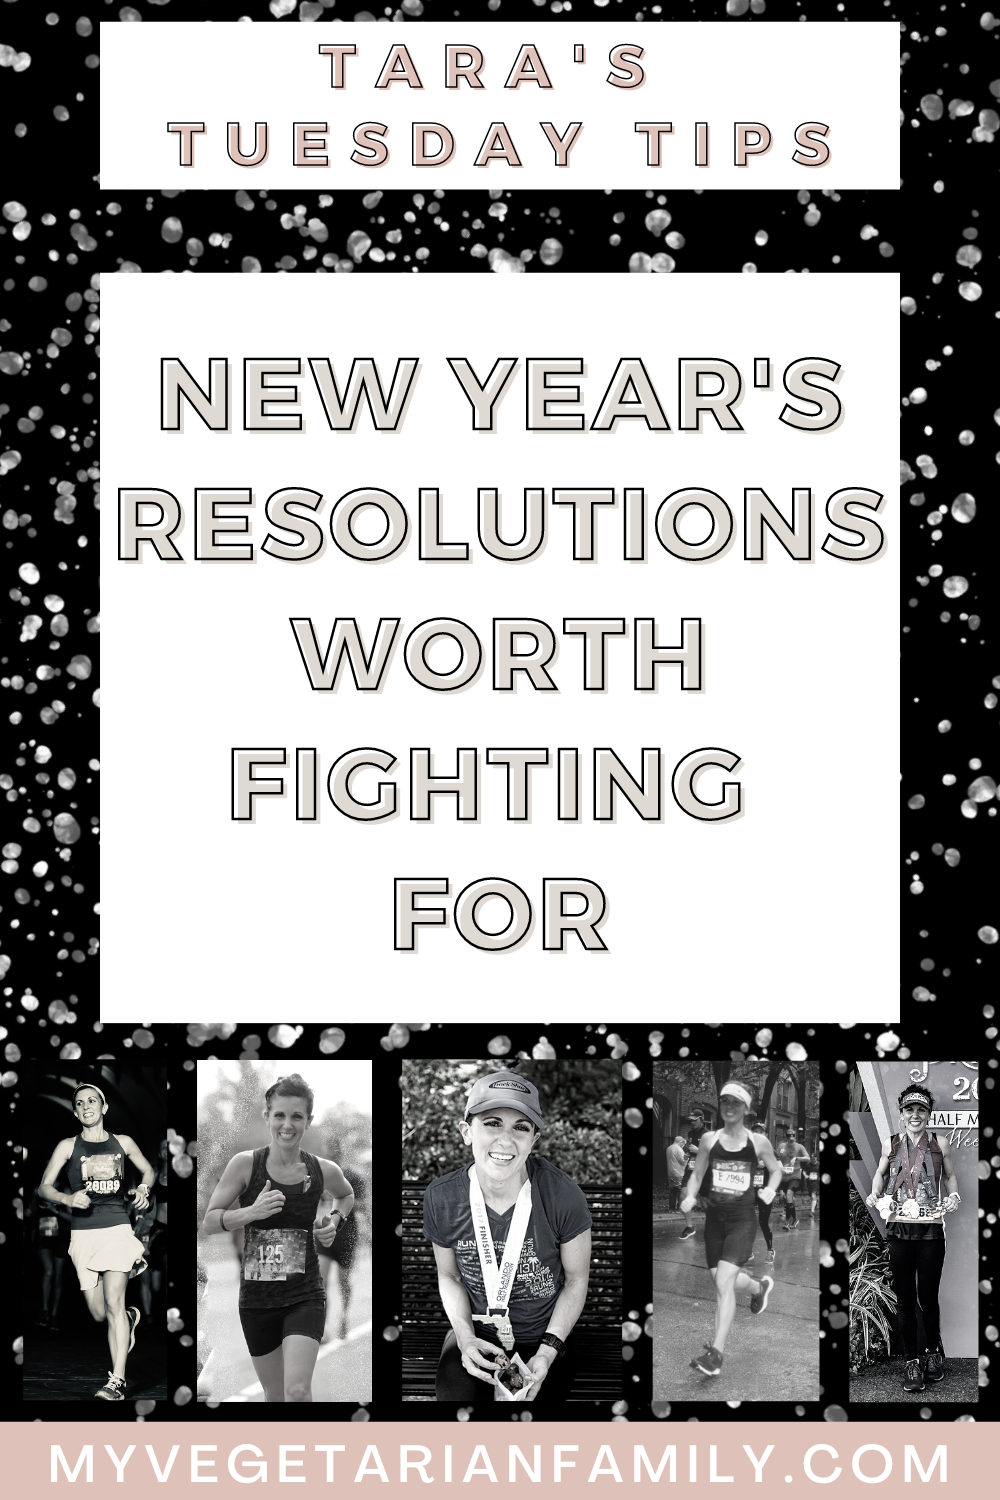 New Year's Resolutions Worth Fighting For | Tara's Tuesday Tips | My Vegetarian Family #newyearsresolutions #tarastuesdaytips